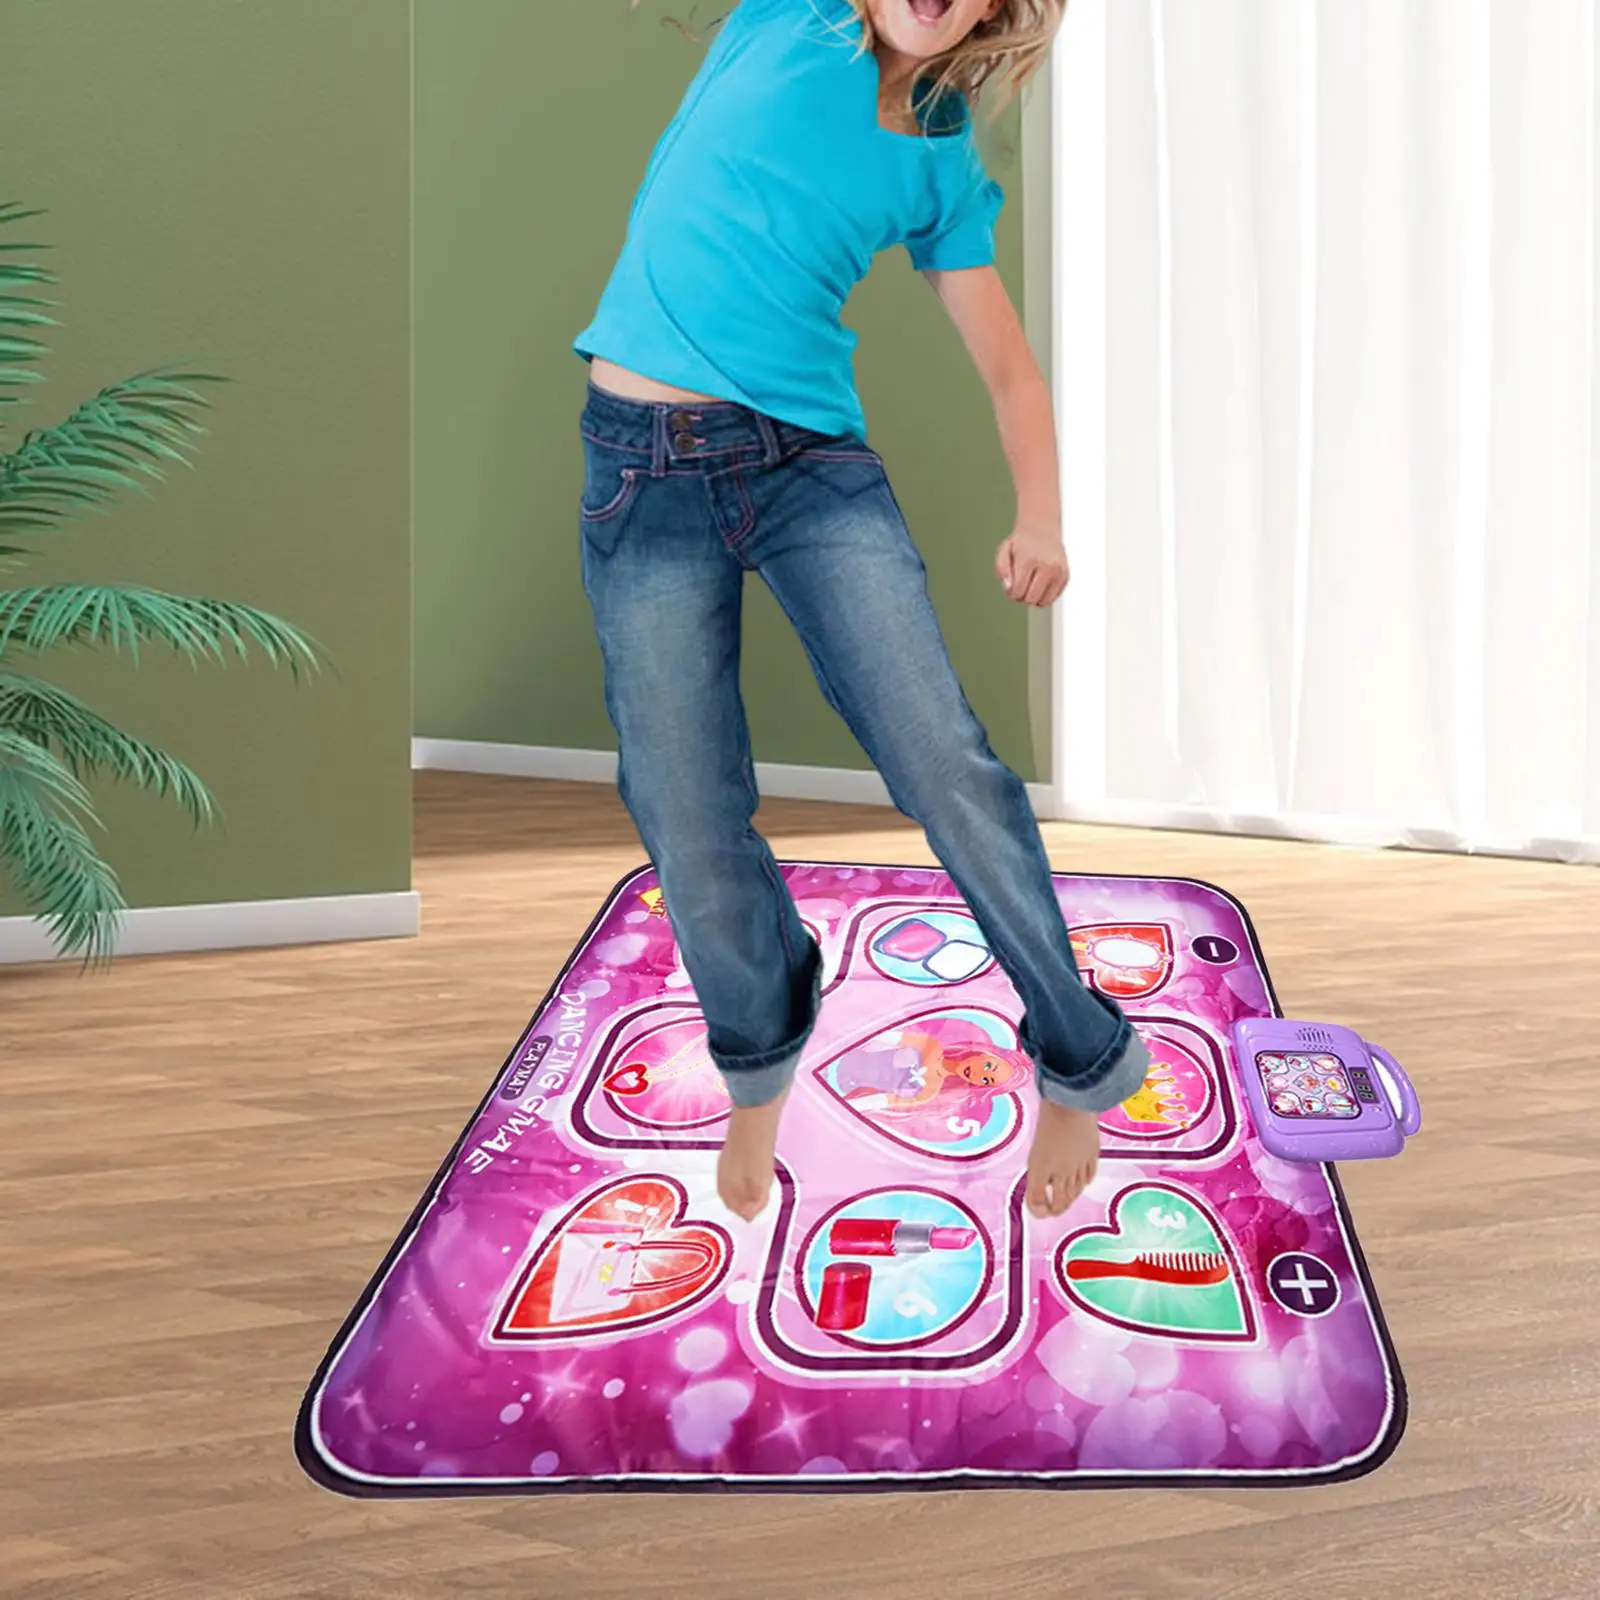 Dance Mixer Playmat Dancing Blanket Dance Mat for Children Toddlers Adults